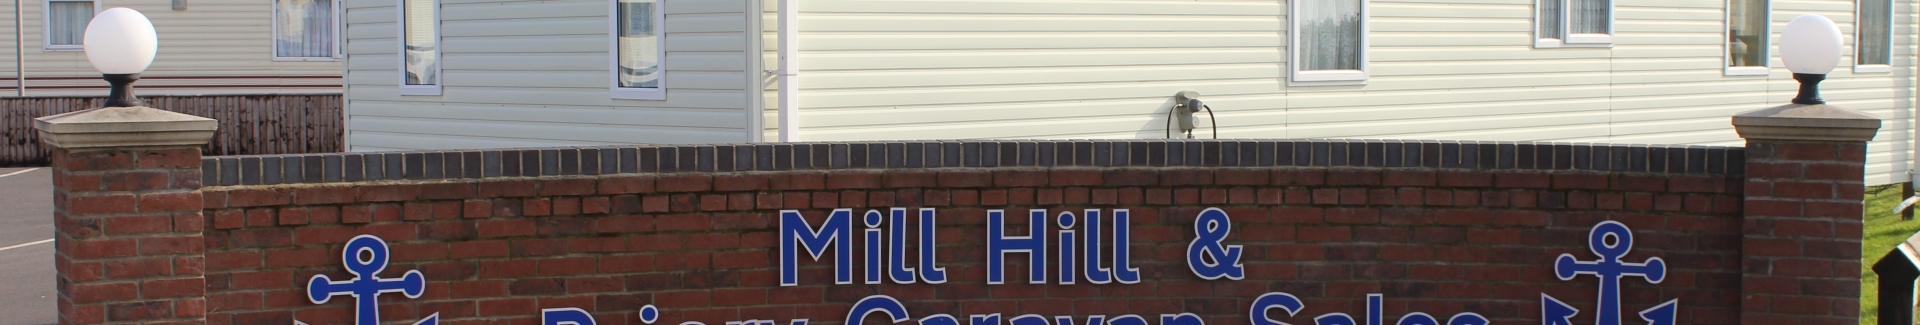 Mill Hill Holiday Park